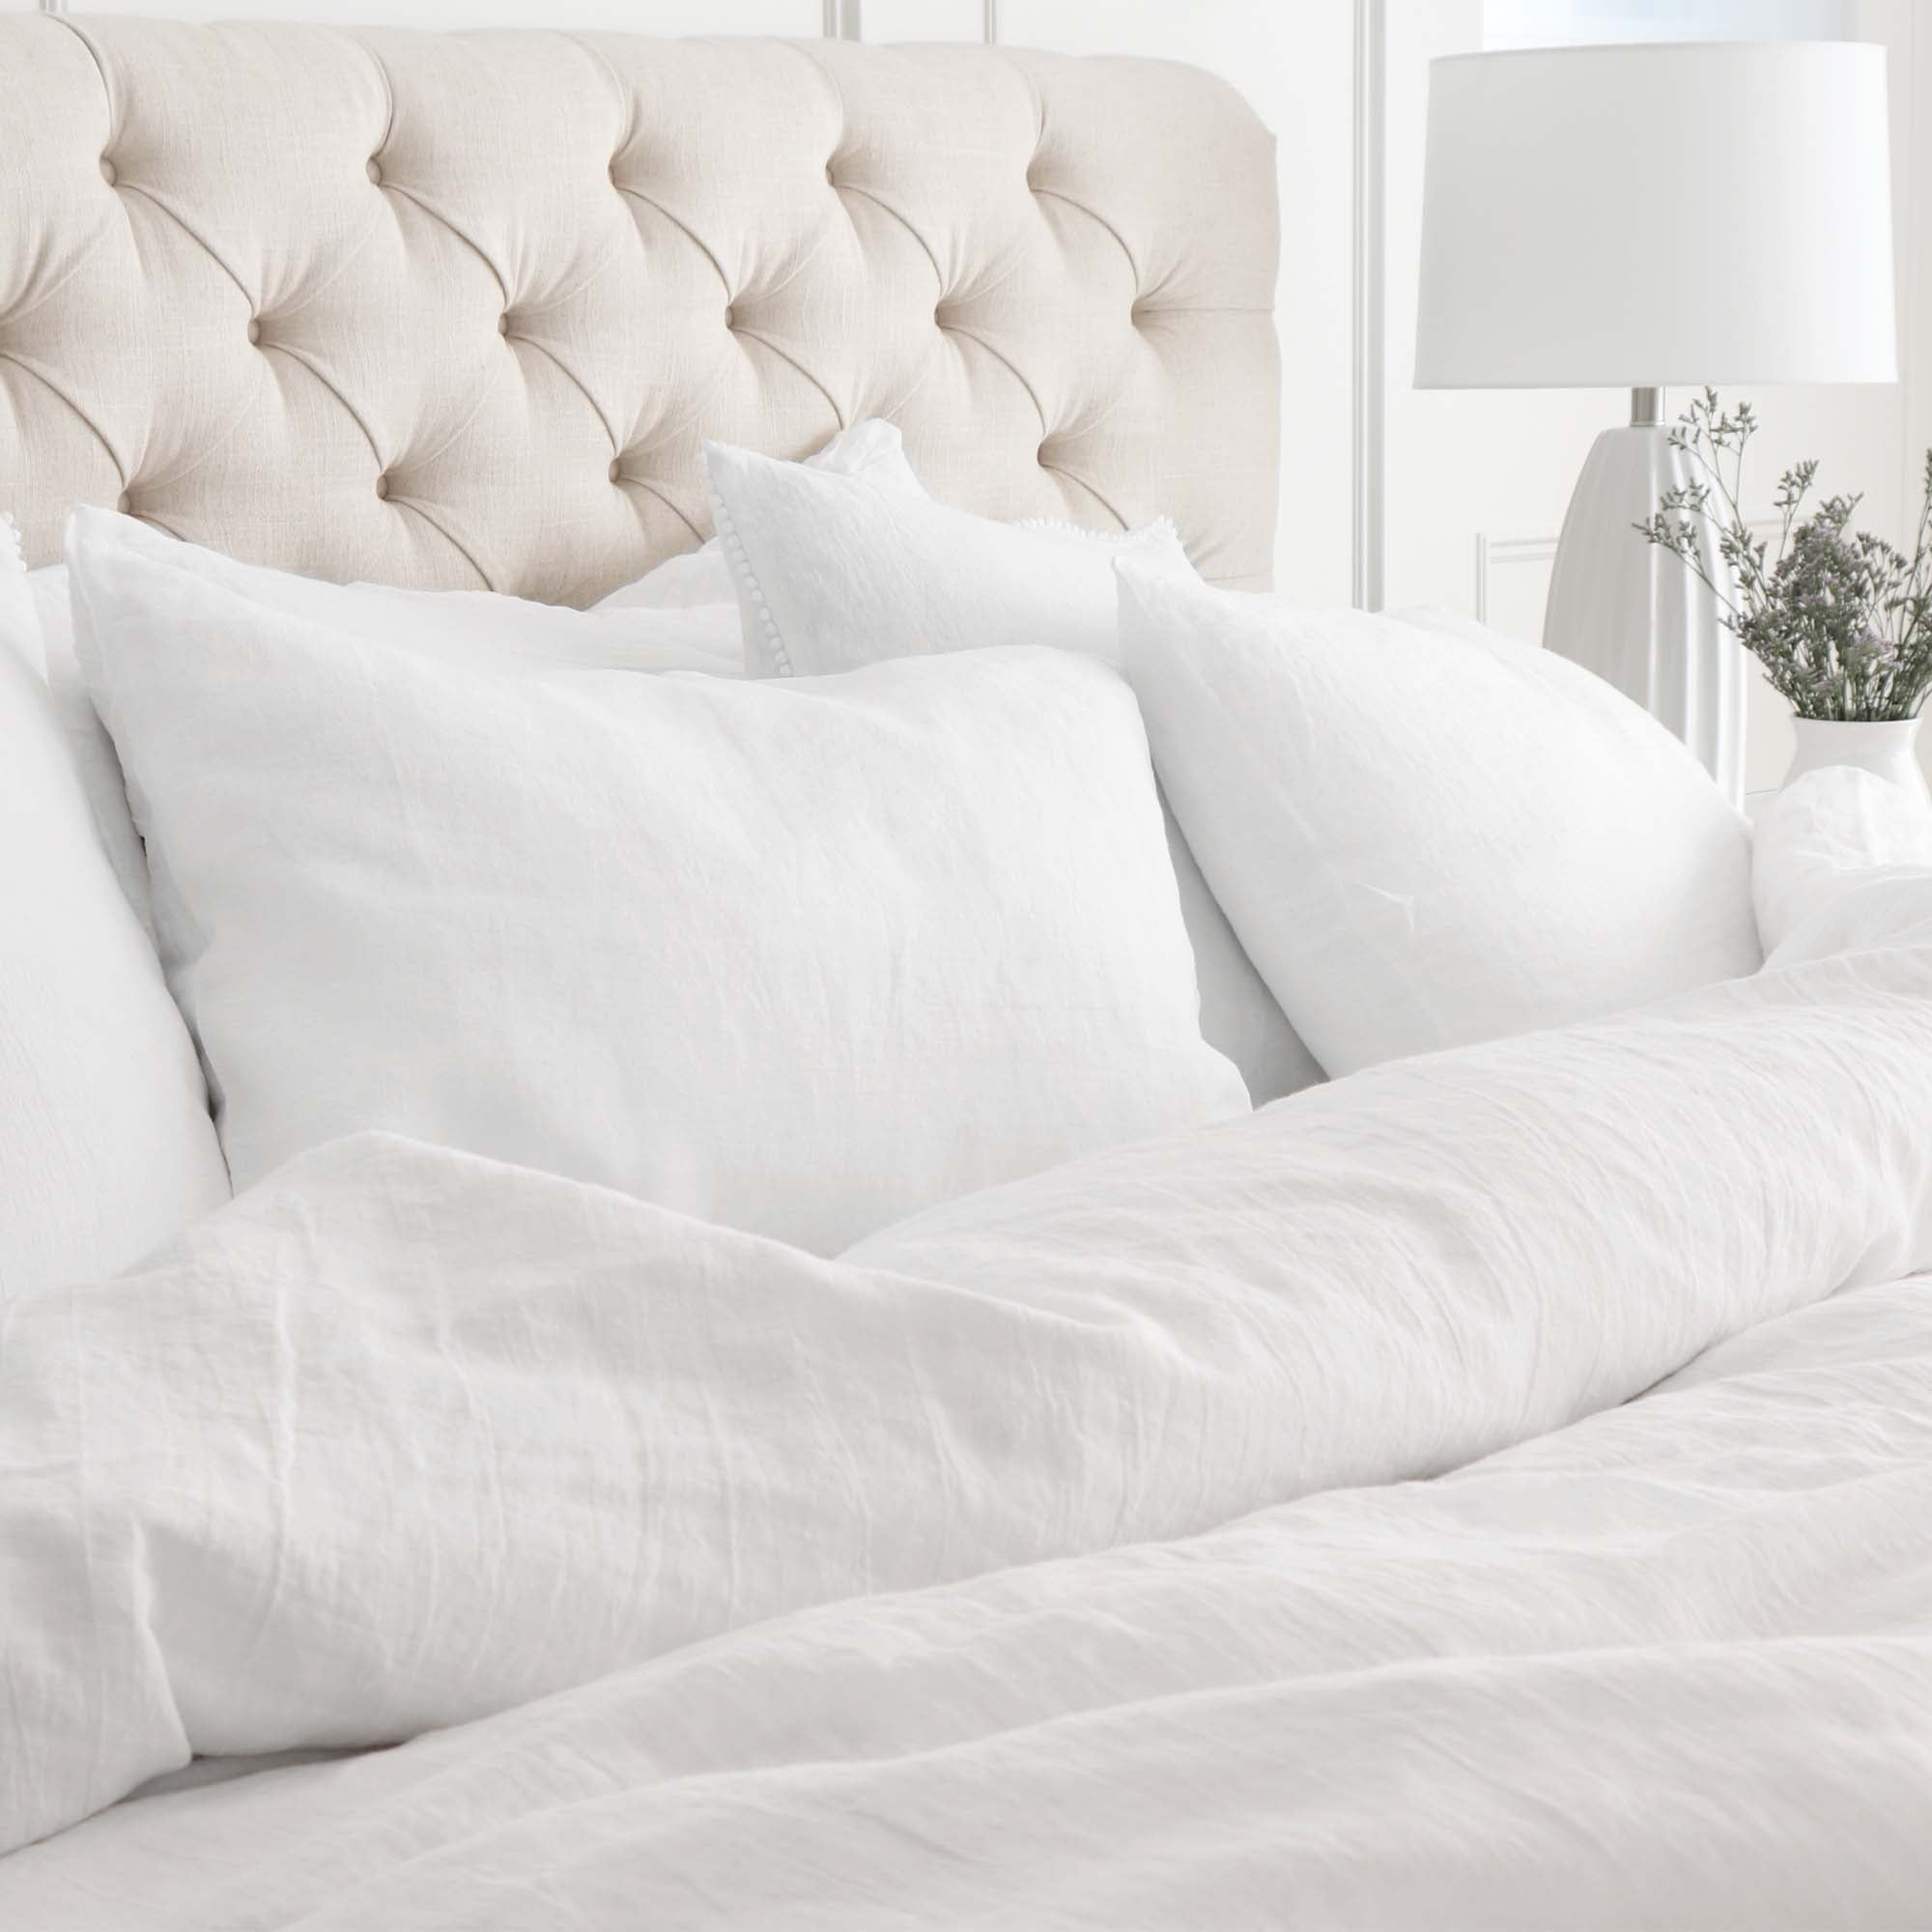 European White Linen OEKO-TEX Pillow Case Covers Bedding in Bedroom  Edit alt text